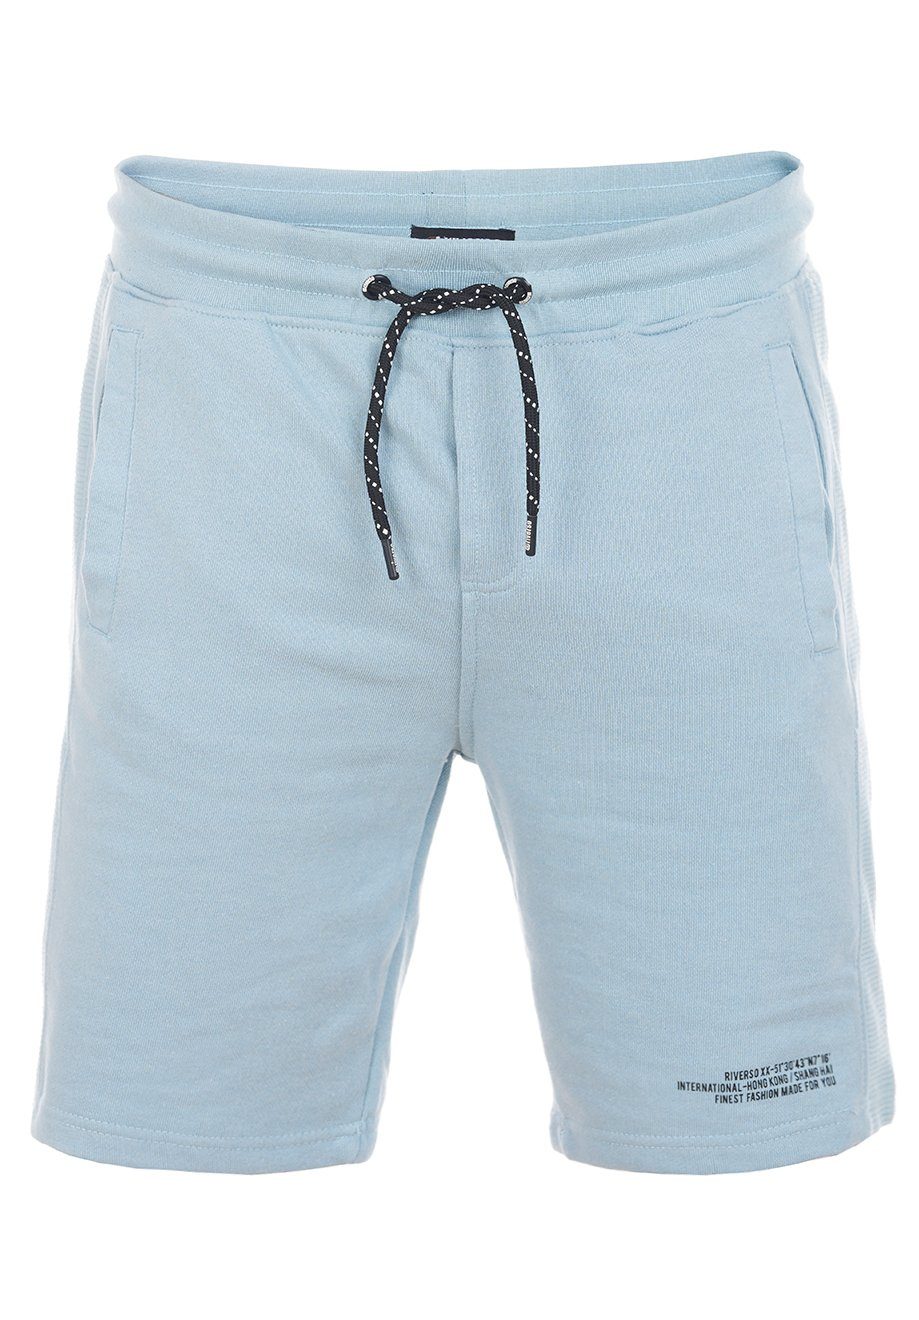 riverso Sweatshorts Herren Sportshorts Vintage Fit Blue mit RIVBlake Jeans Regular Kordelzug Bermudashort